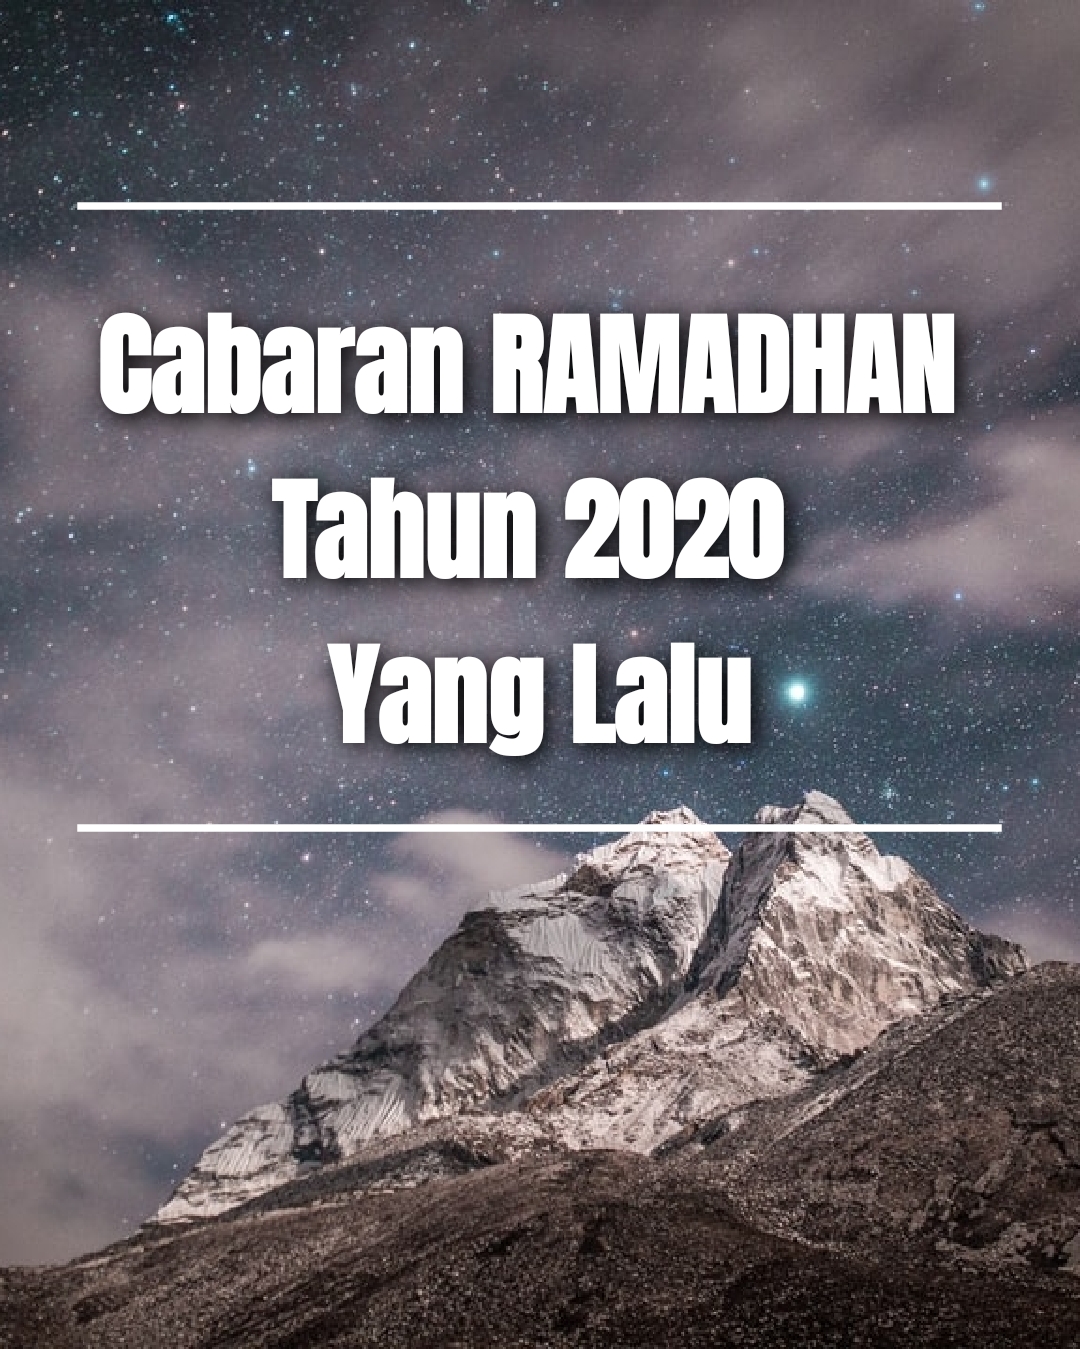 Cabaran Ramadhan 2020 Yang Lalu